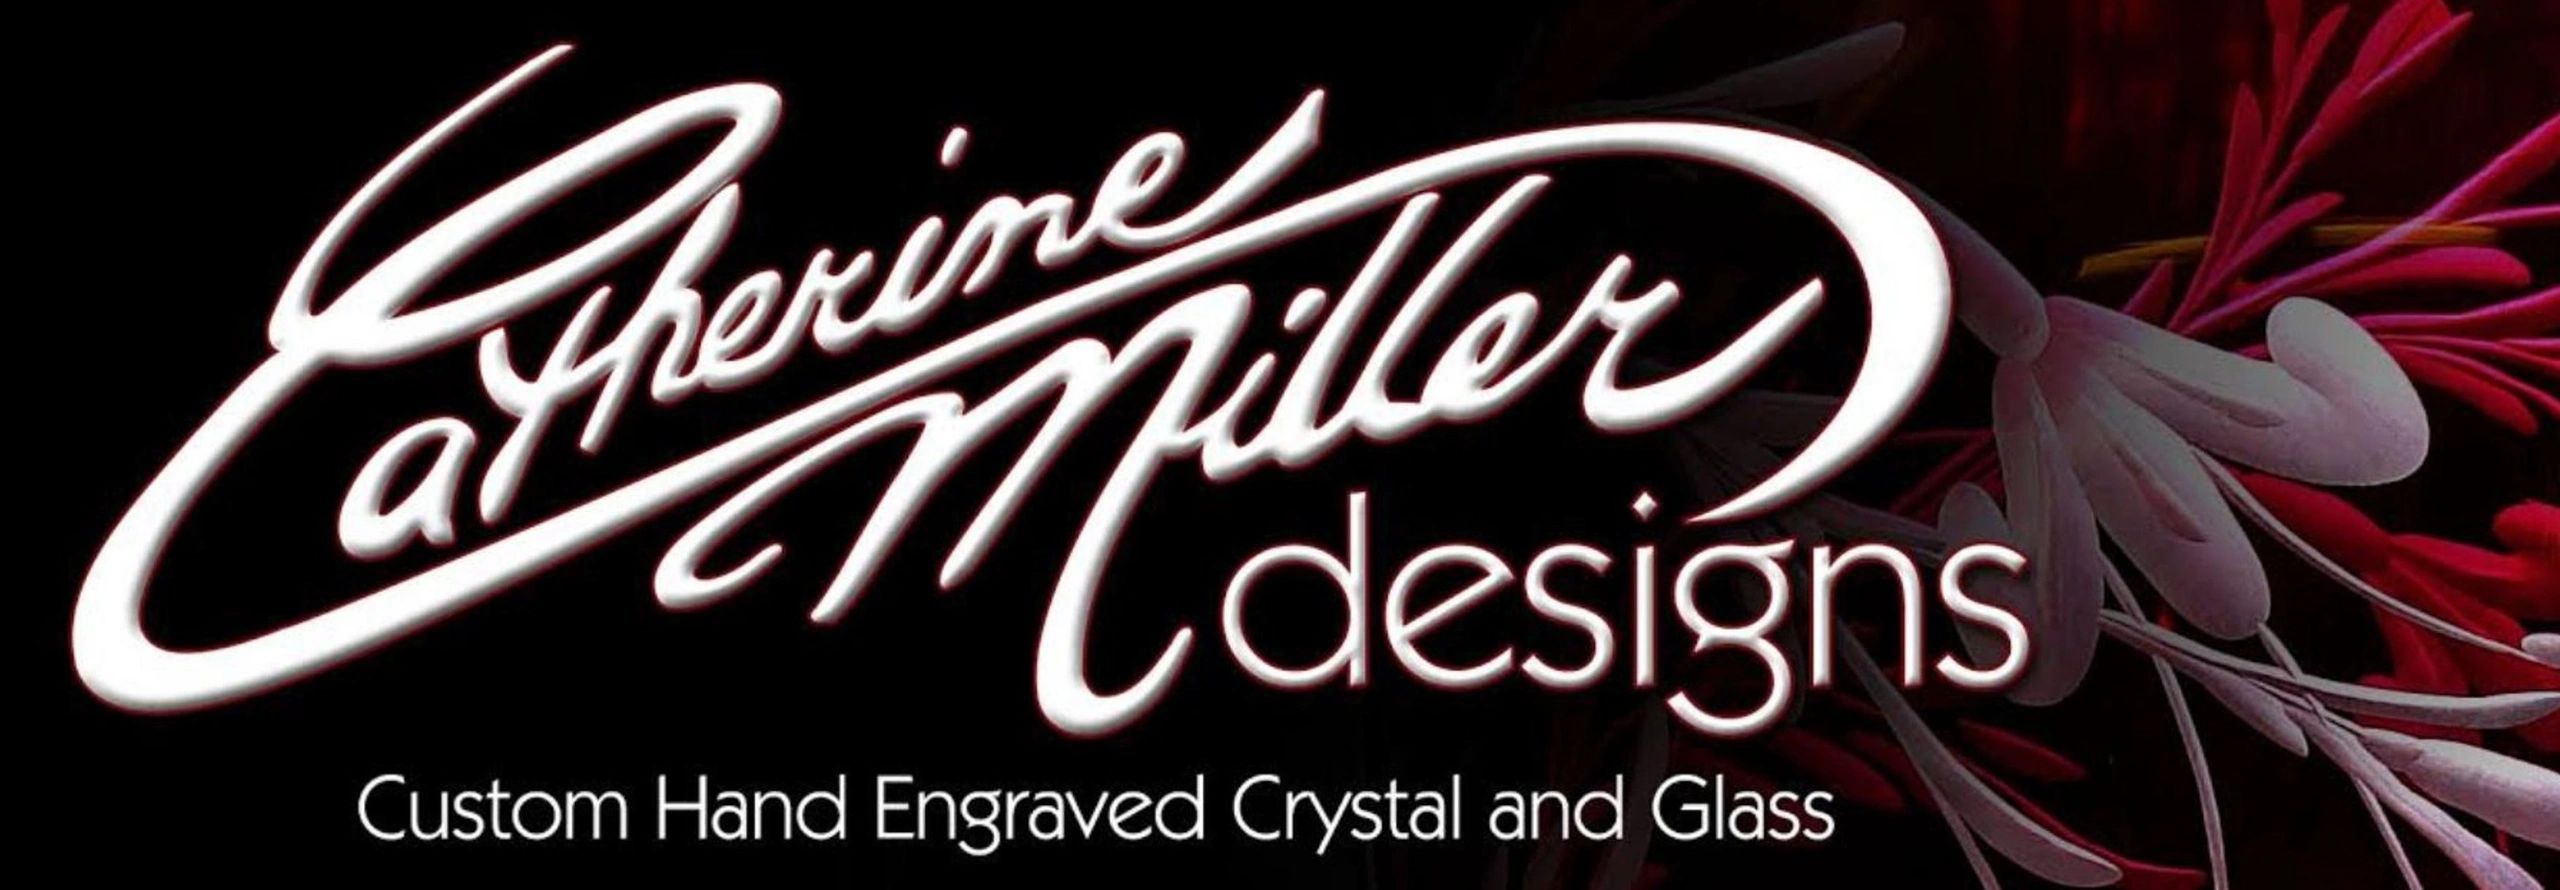 Catherine Miller designs- Custom hand engraved crystal & glass- fine gifts, custom made 